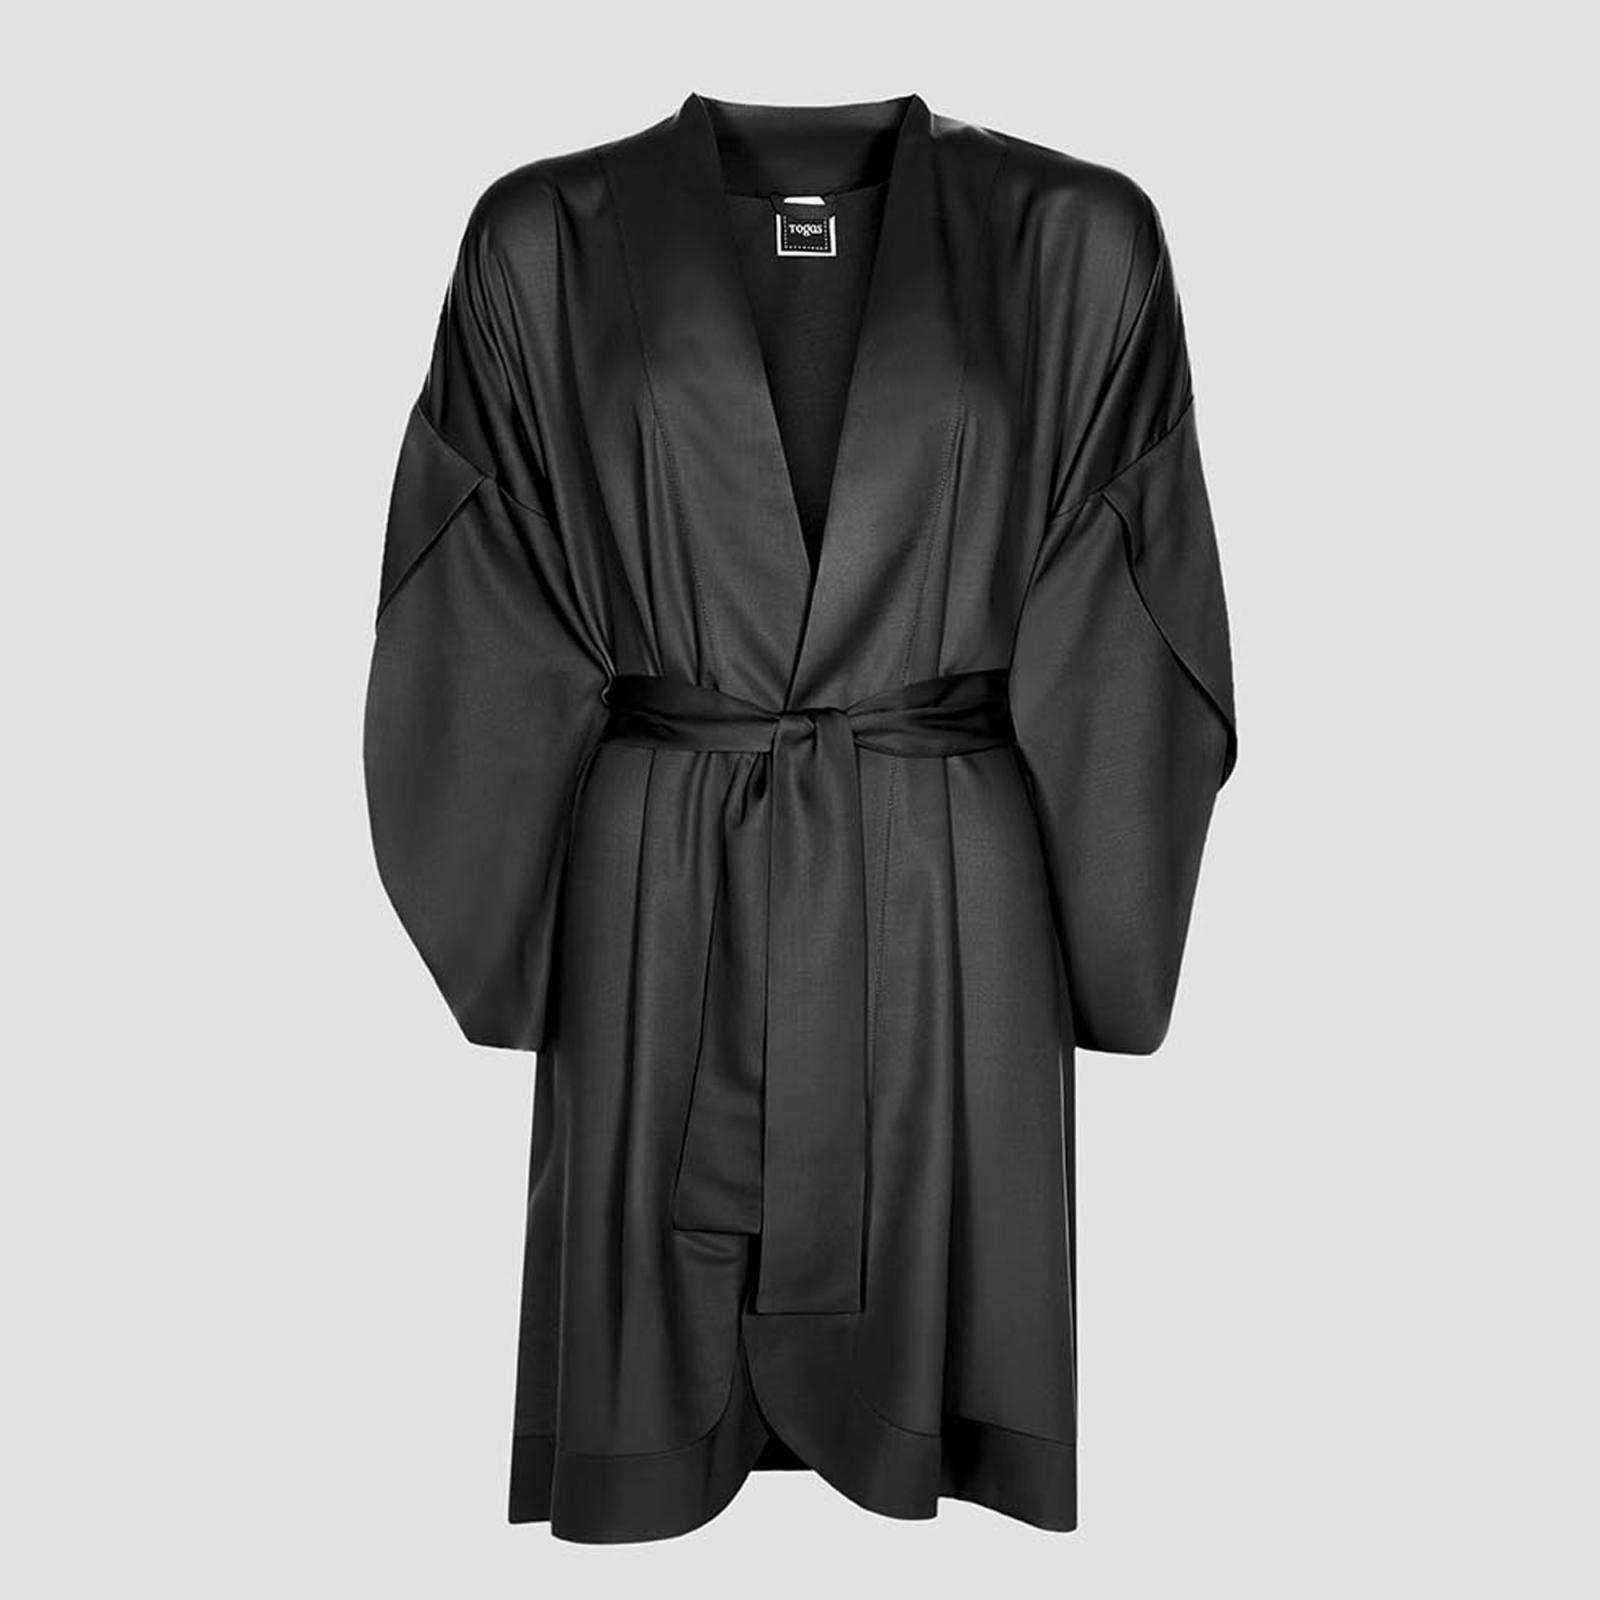 фото Халат-кимоно короткое togas наоми чёрное xs (42)